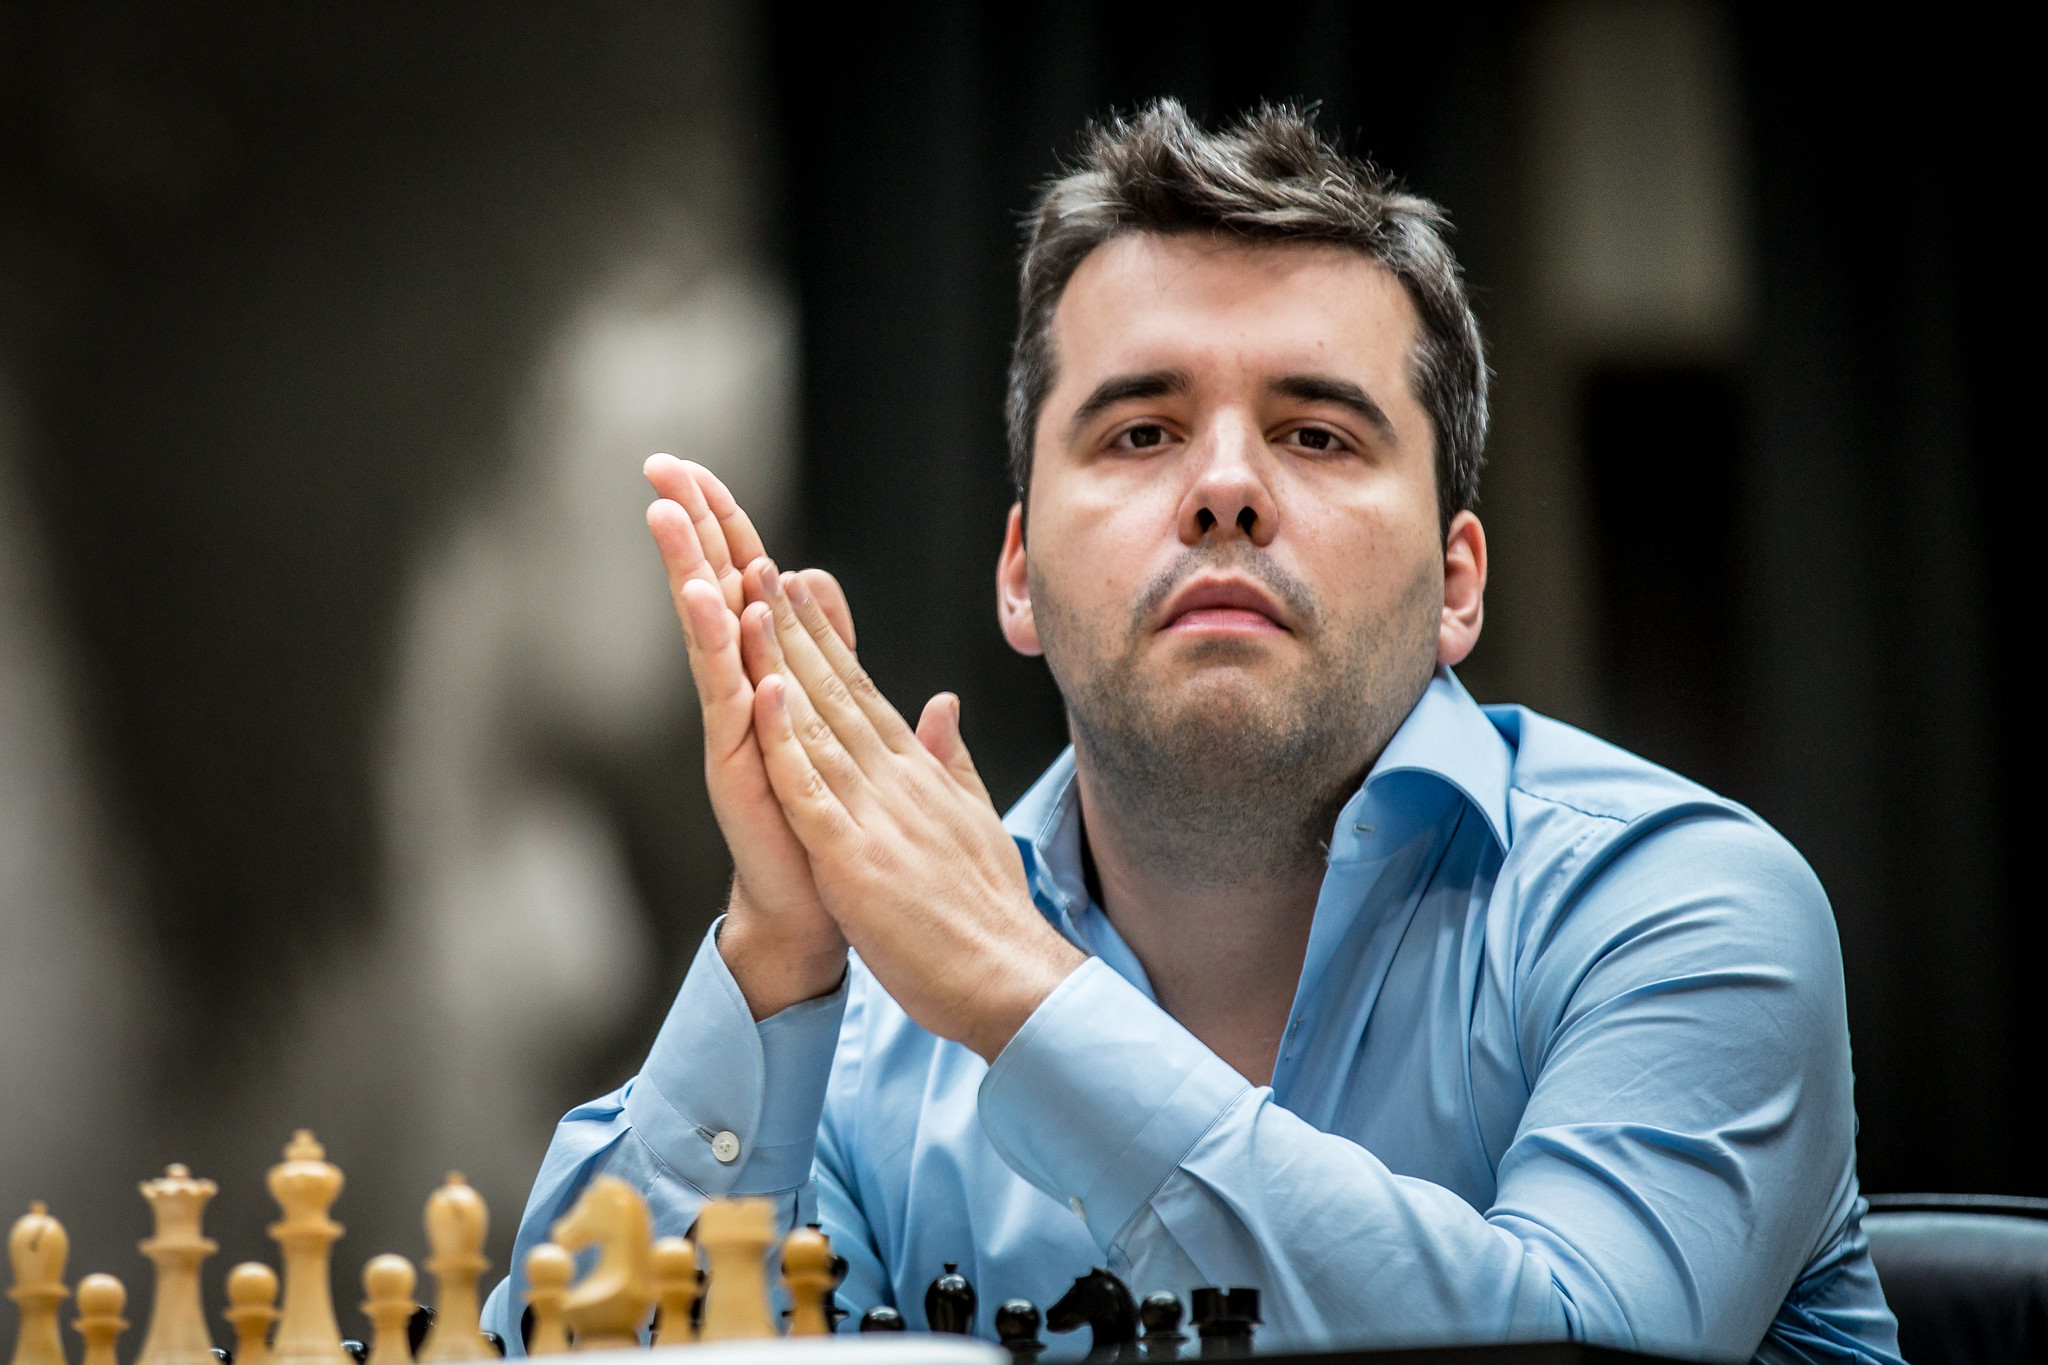 International Chess Federation on X: Ian Nepomniachtchi 🇷🇺 is